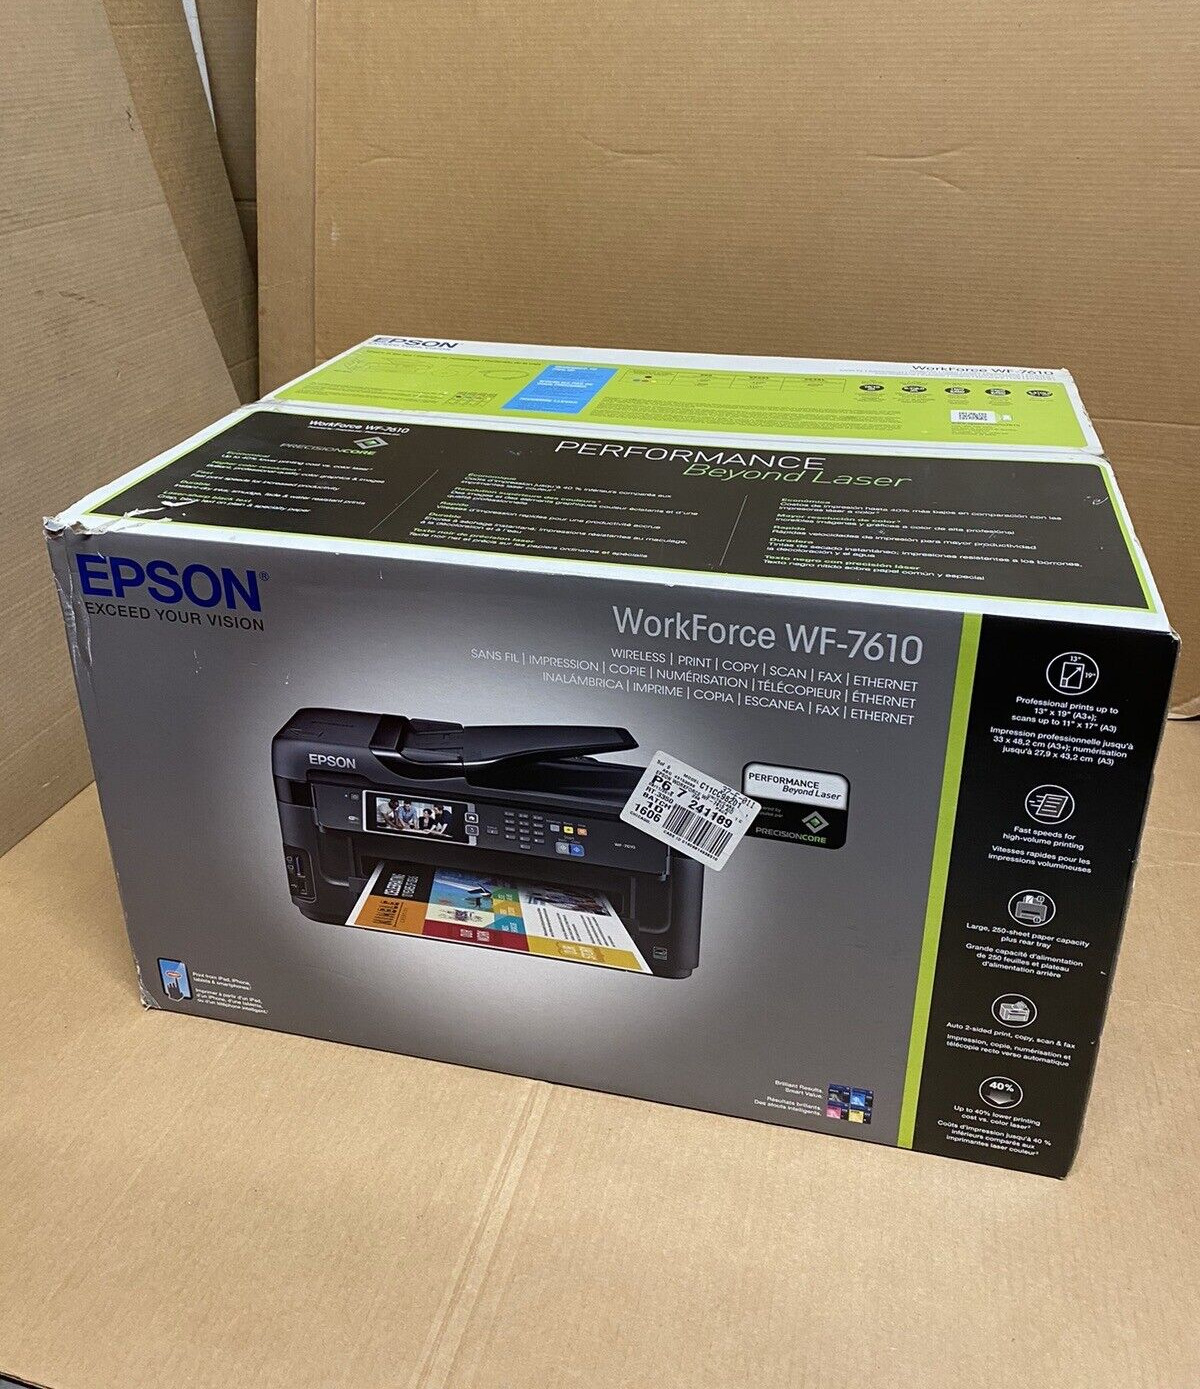 Epson WorkForce WF-7610 Wireless All-in-One Printer Network Ready New Sealed Box